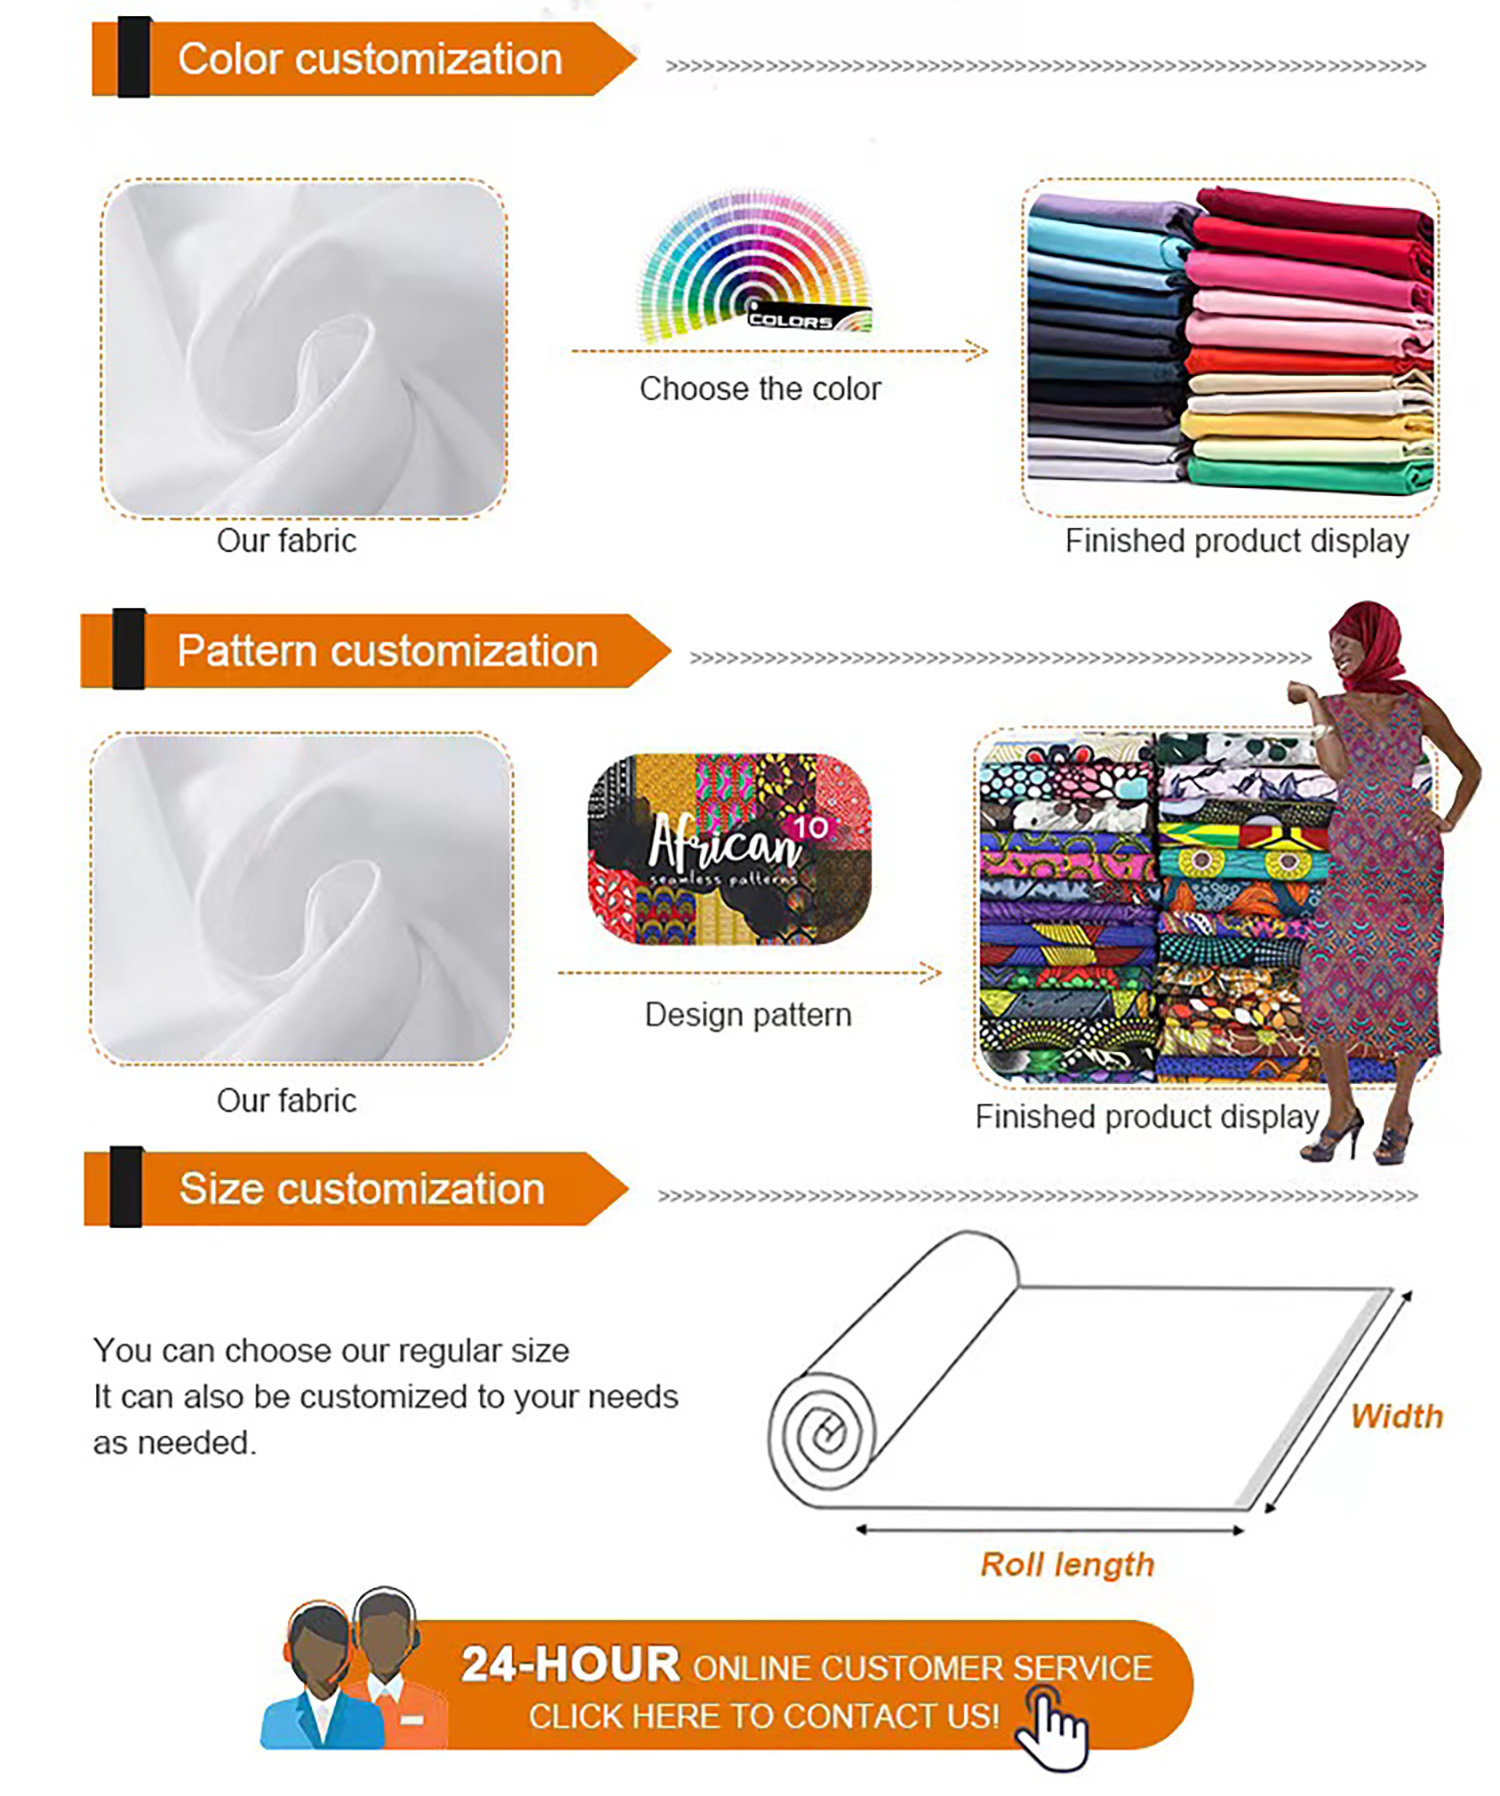 Brooklyn Museum: Dream Weavers: The Designers Revolutionizing African Textiles